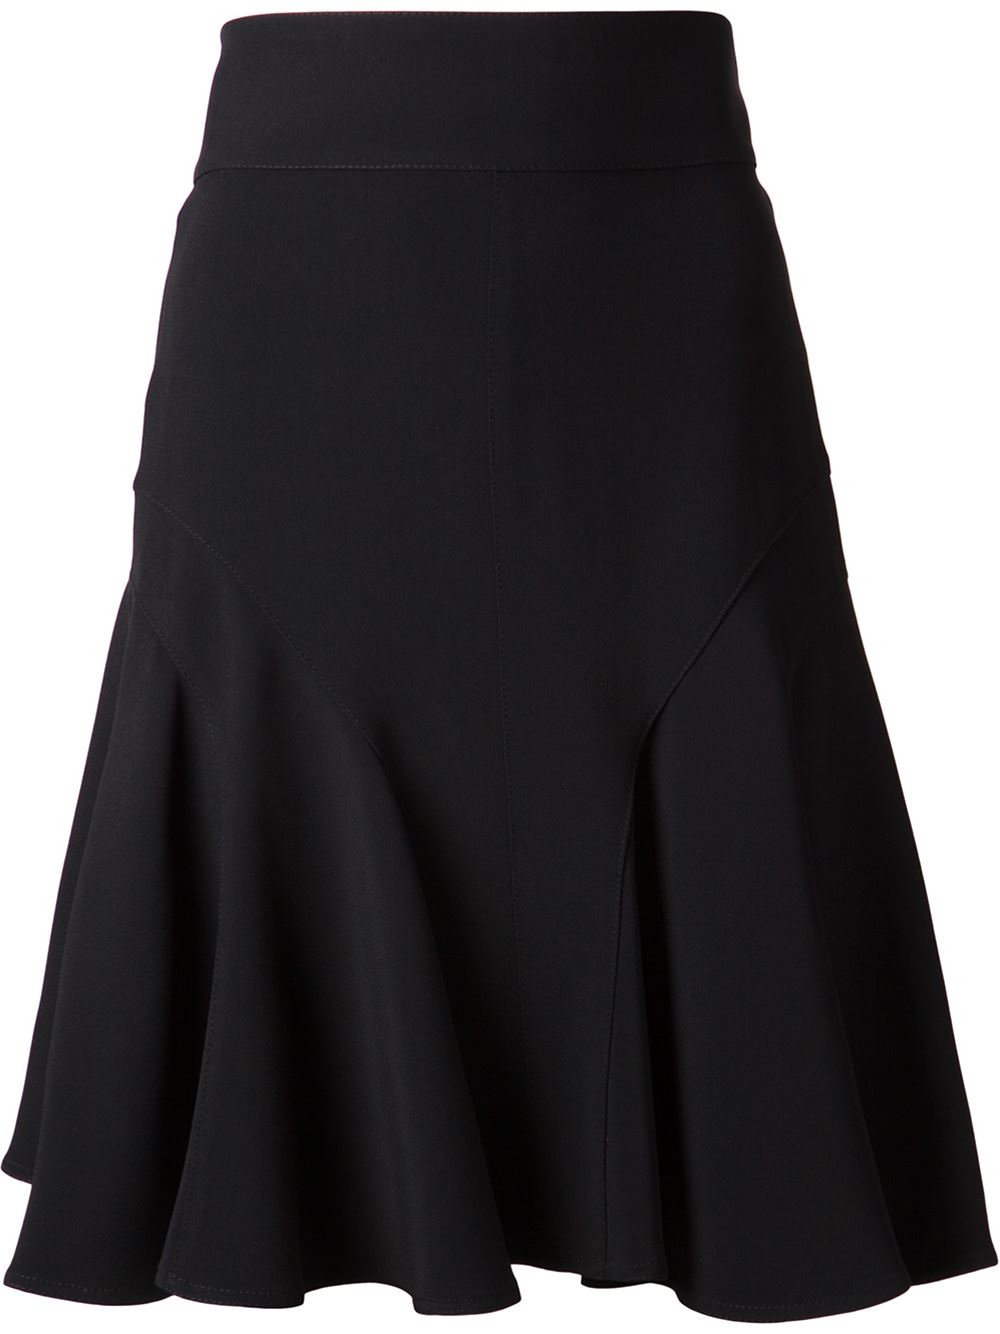 Givenchy A-Line Godet Skirt in Black | Lyst